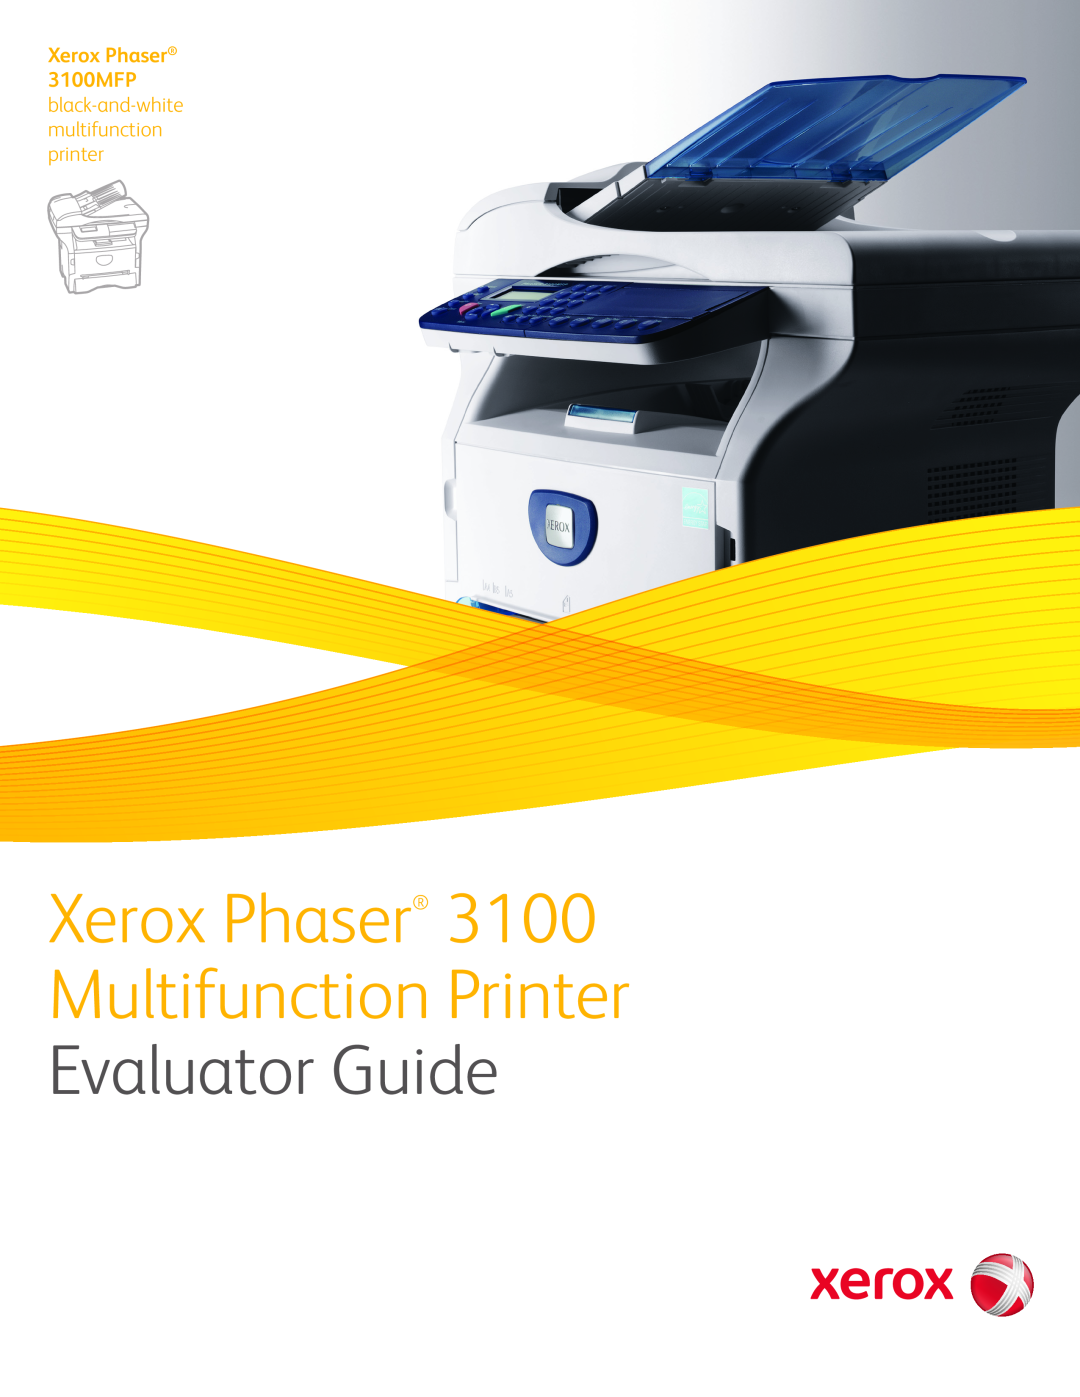 Xerox 3100MFP manual Xerox Phaser Multifunction Printer, Evaluator Guide 